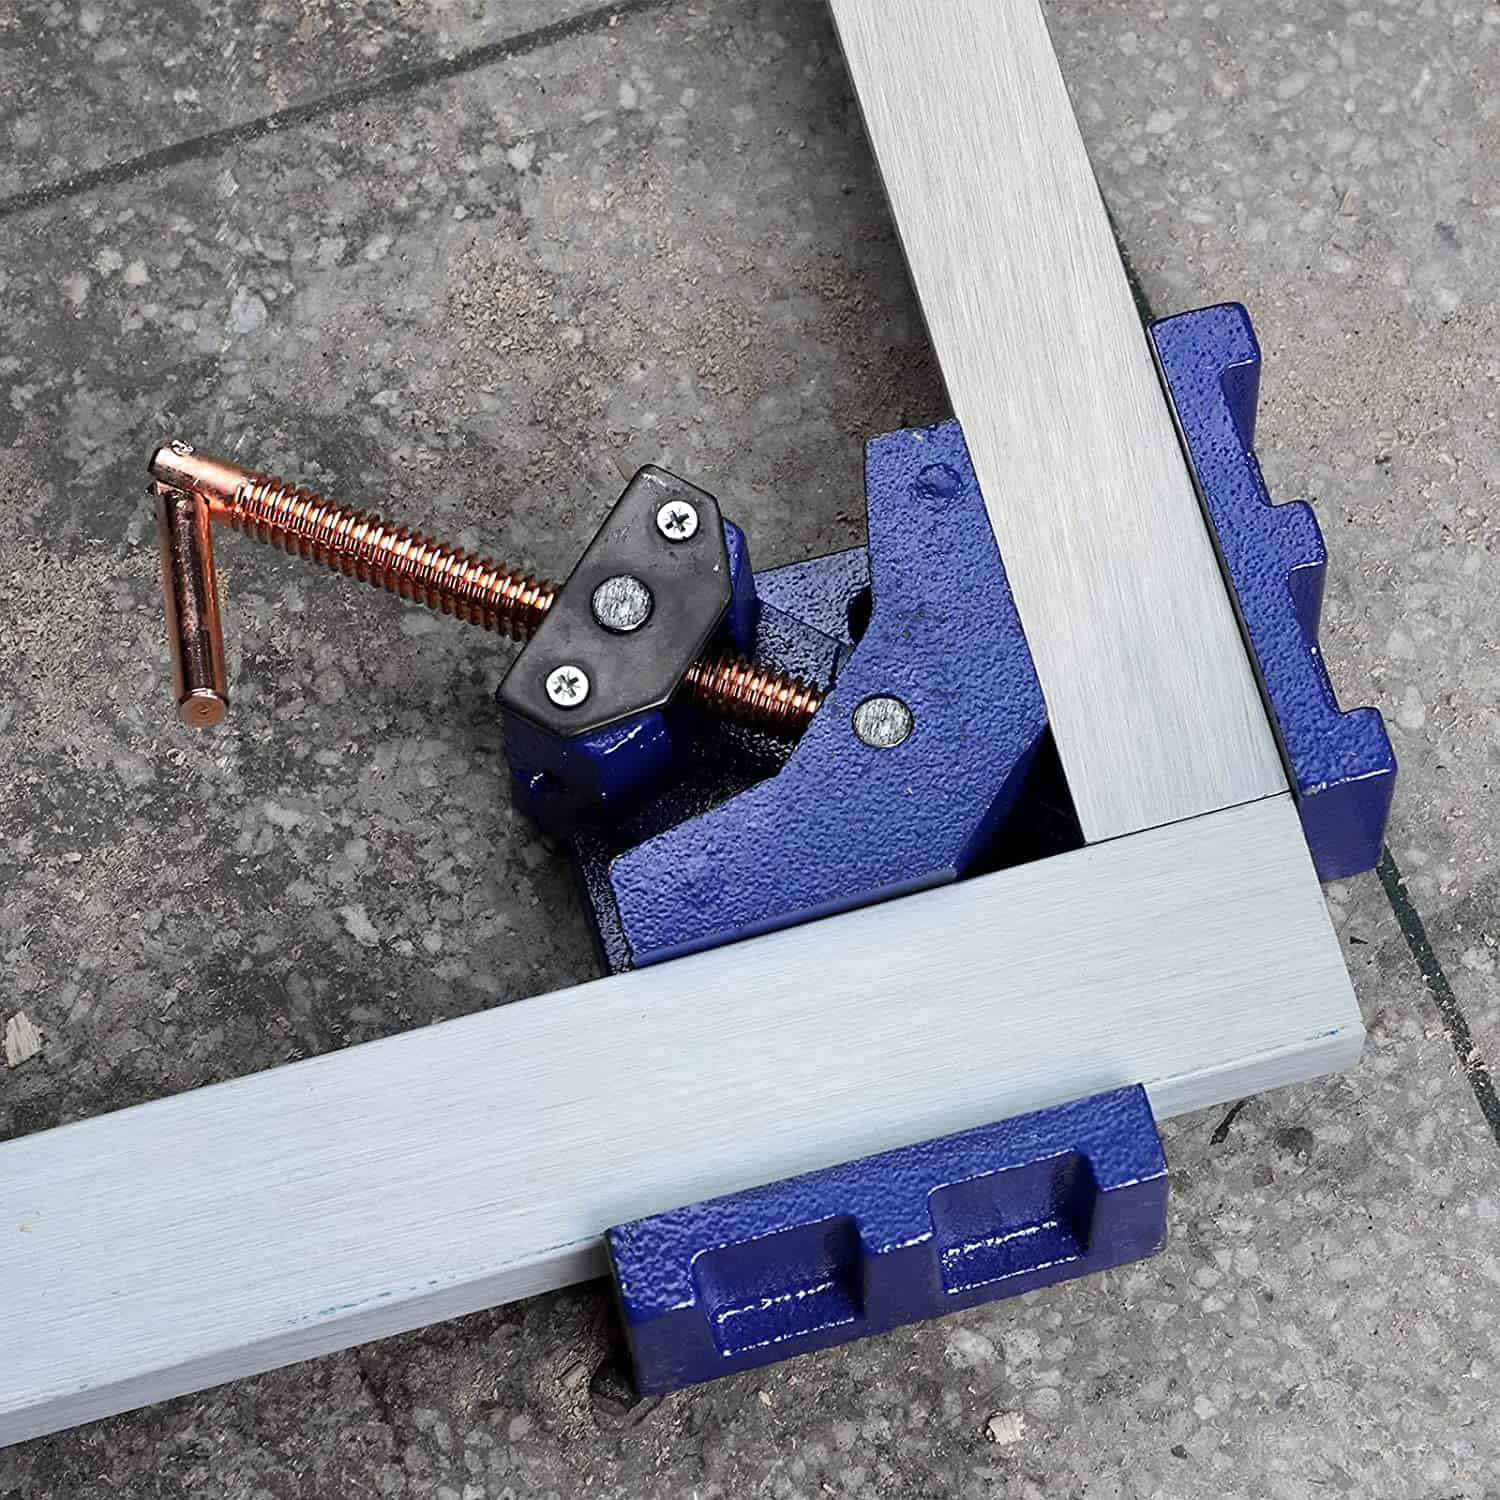 Best corner clamp for welding: BETOOLL Cast Iron